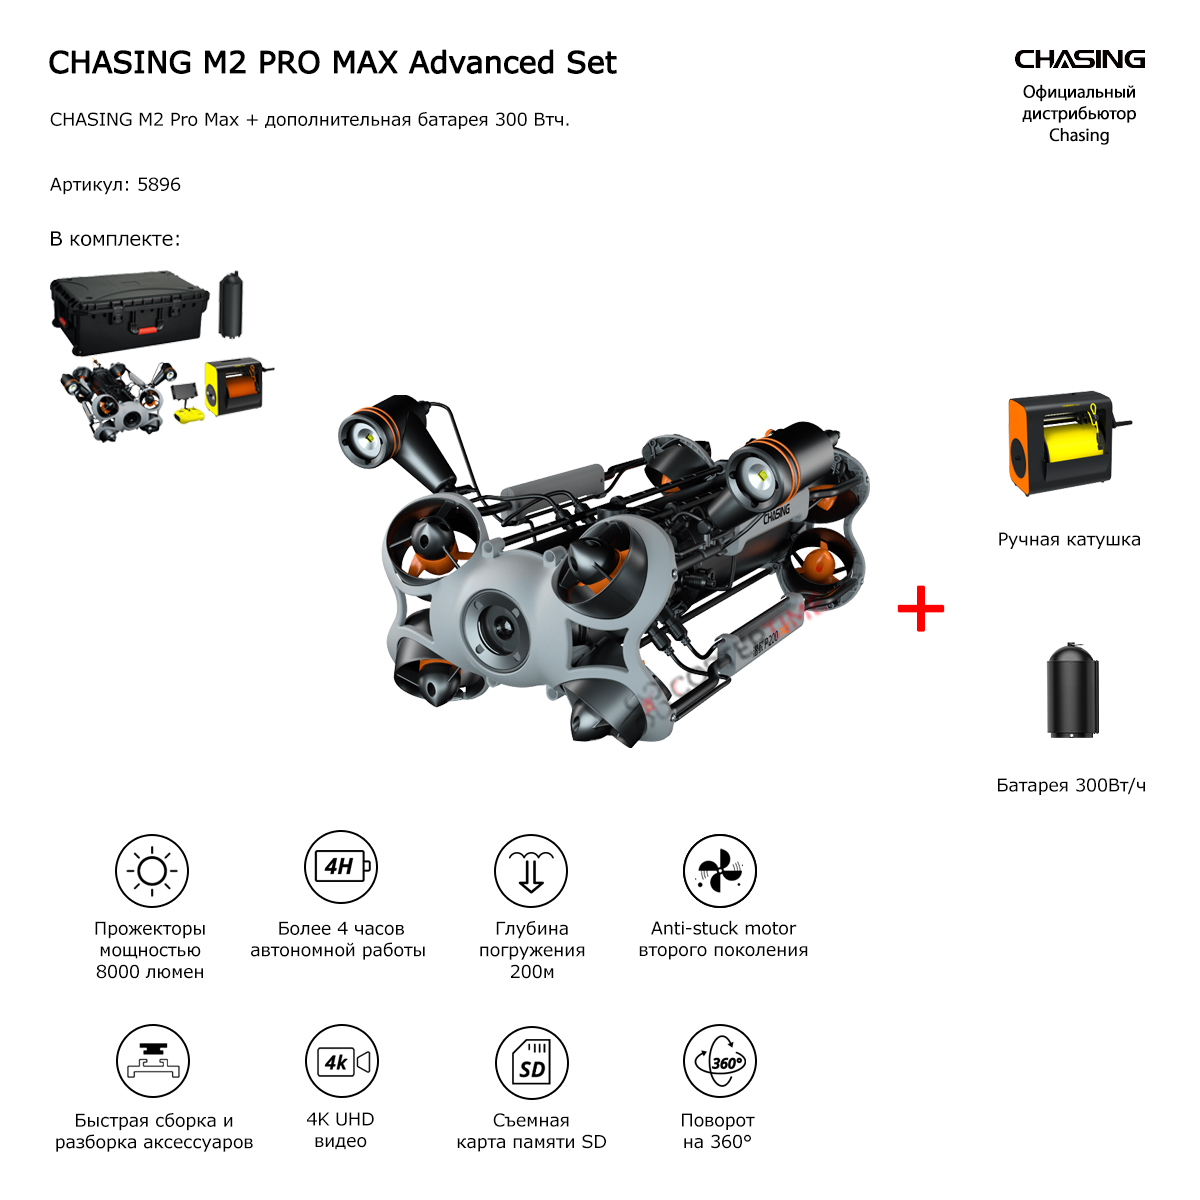 CHASING M2 PRO MAX Advanced Set